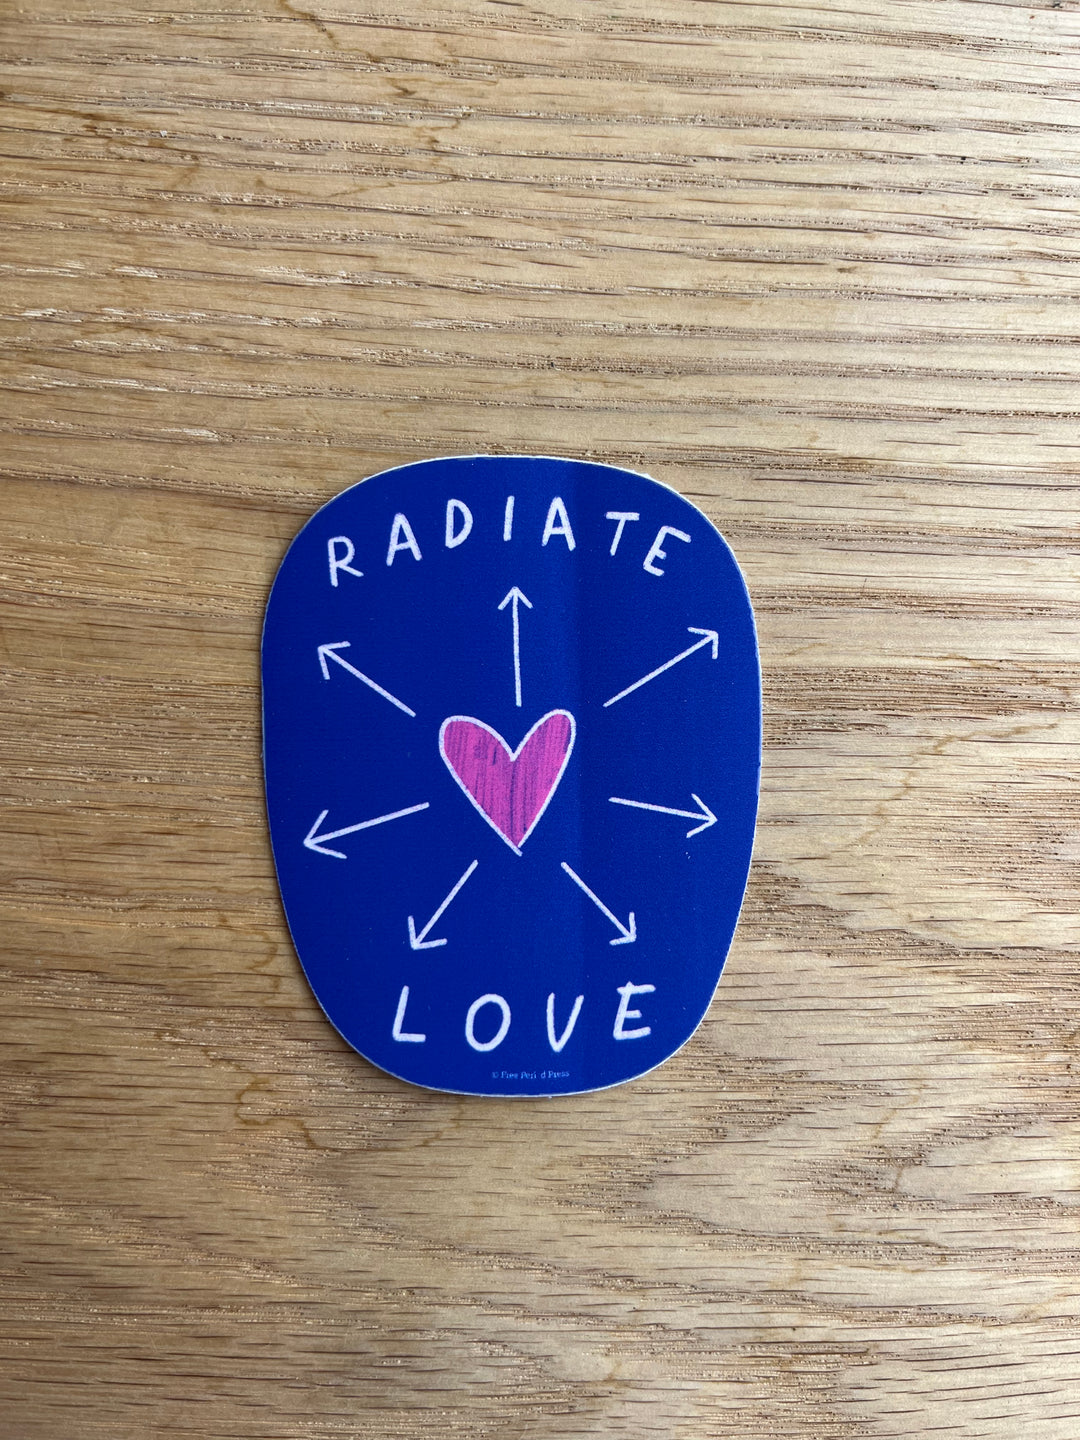 Radiate Love Vinyl Decal Sticker